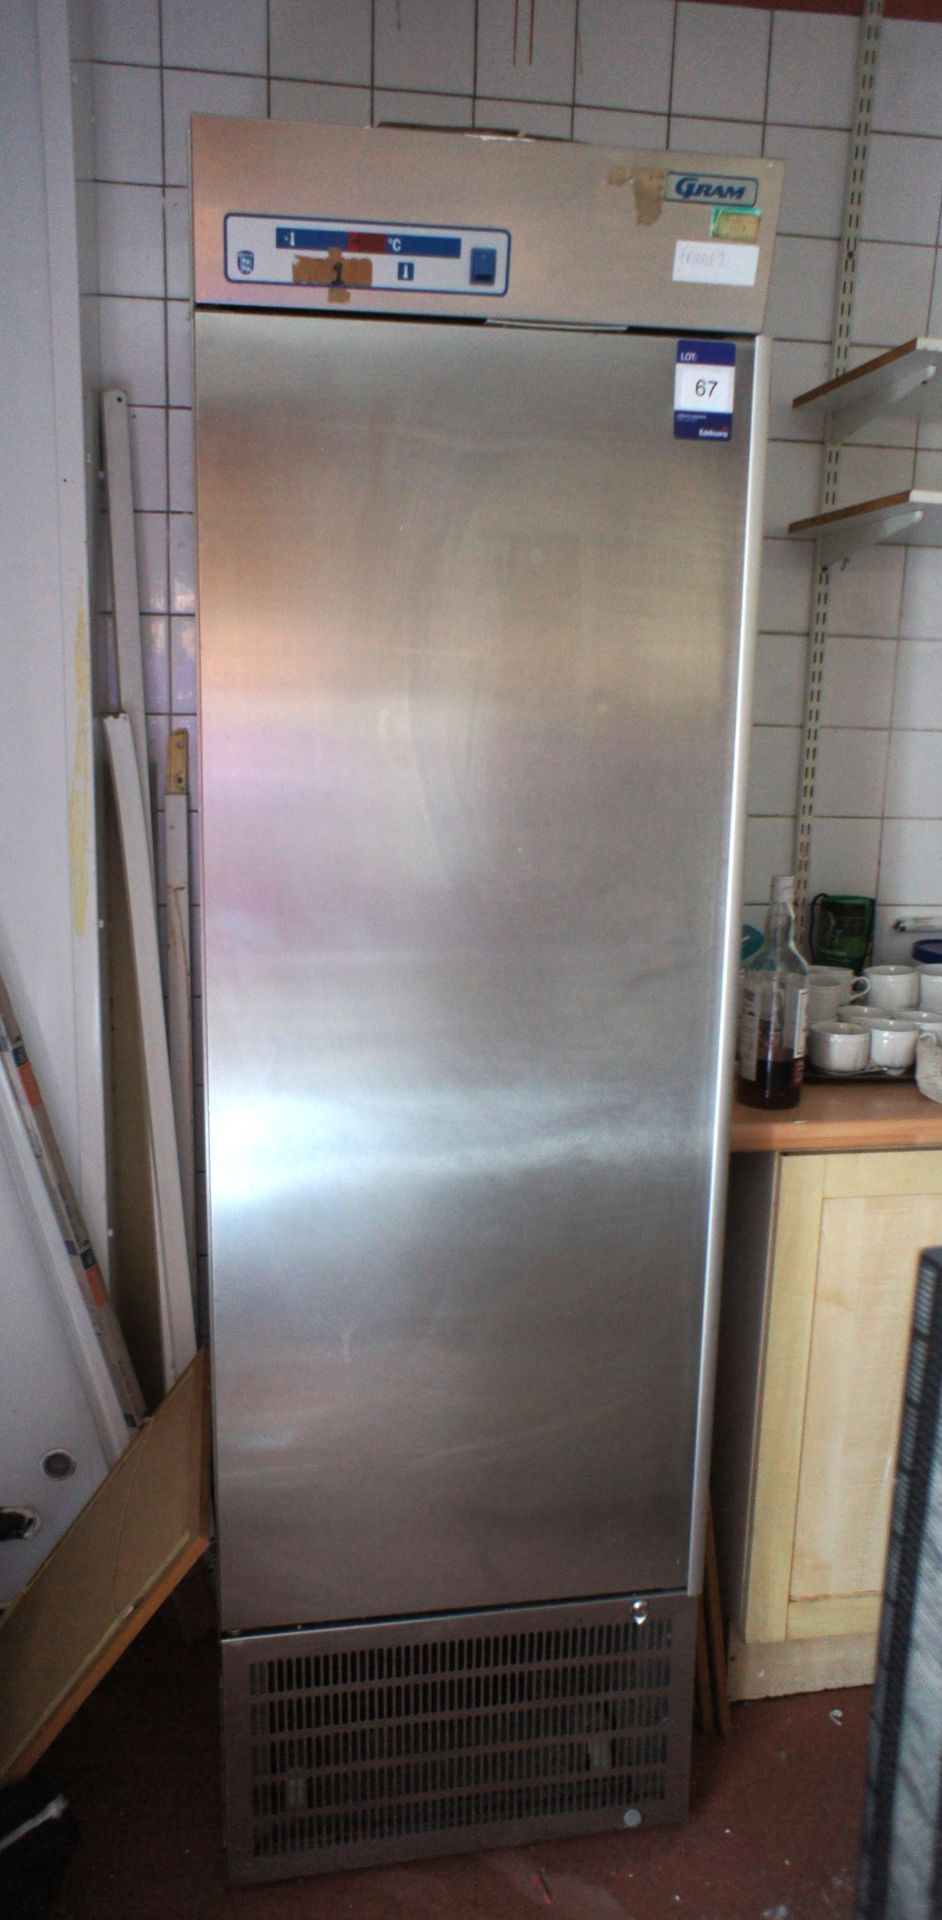 Gram stainless steel single door fridge - Image 2 of 2